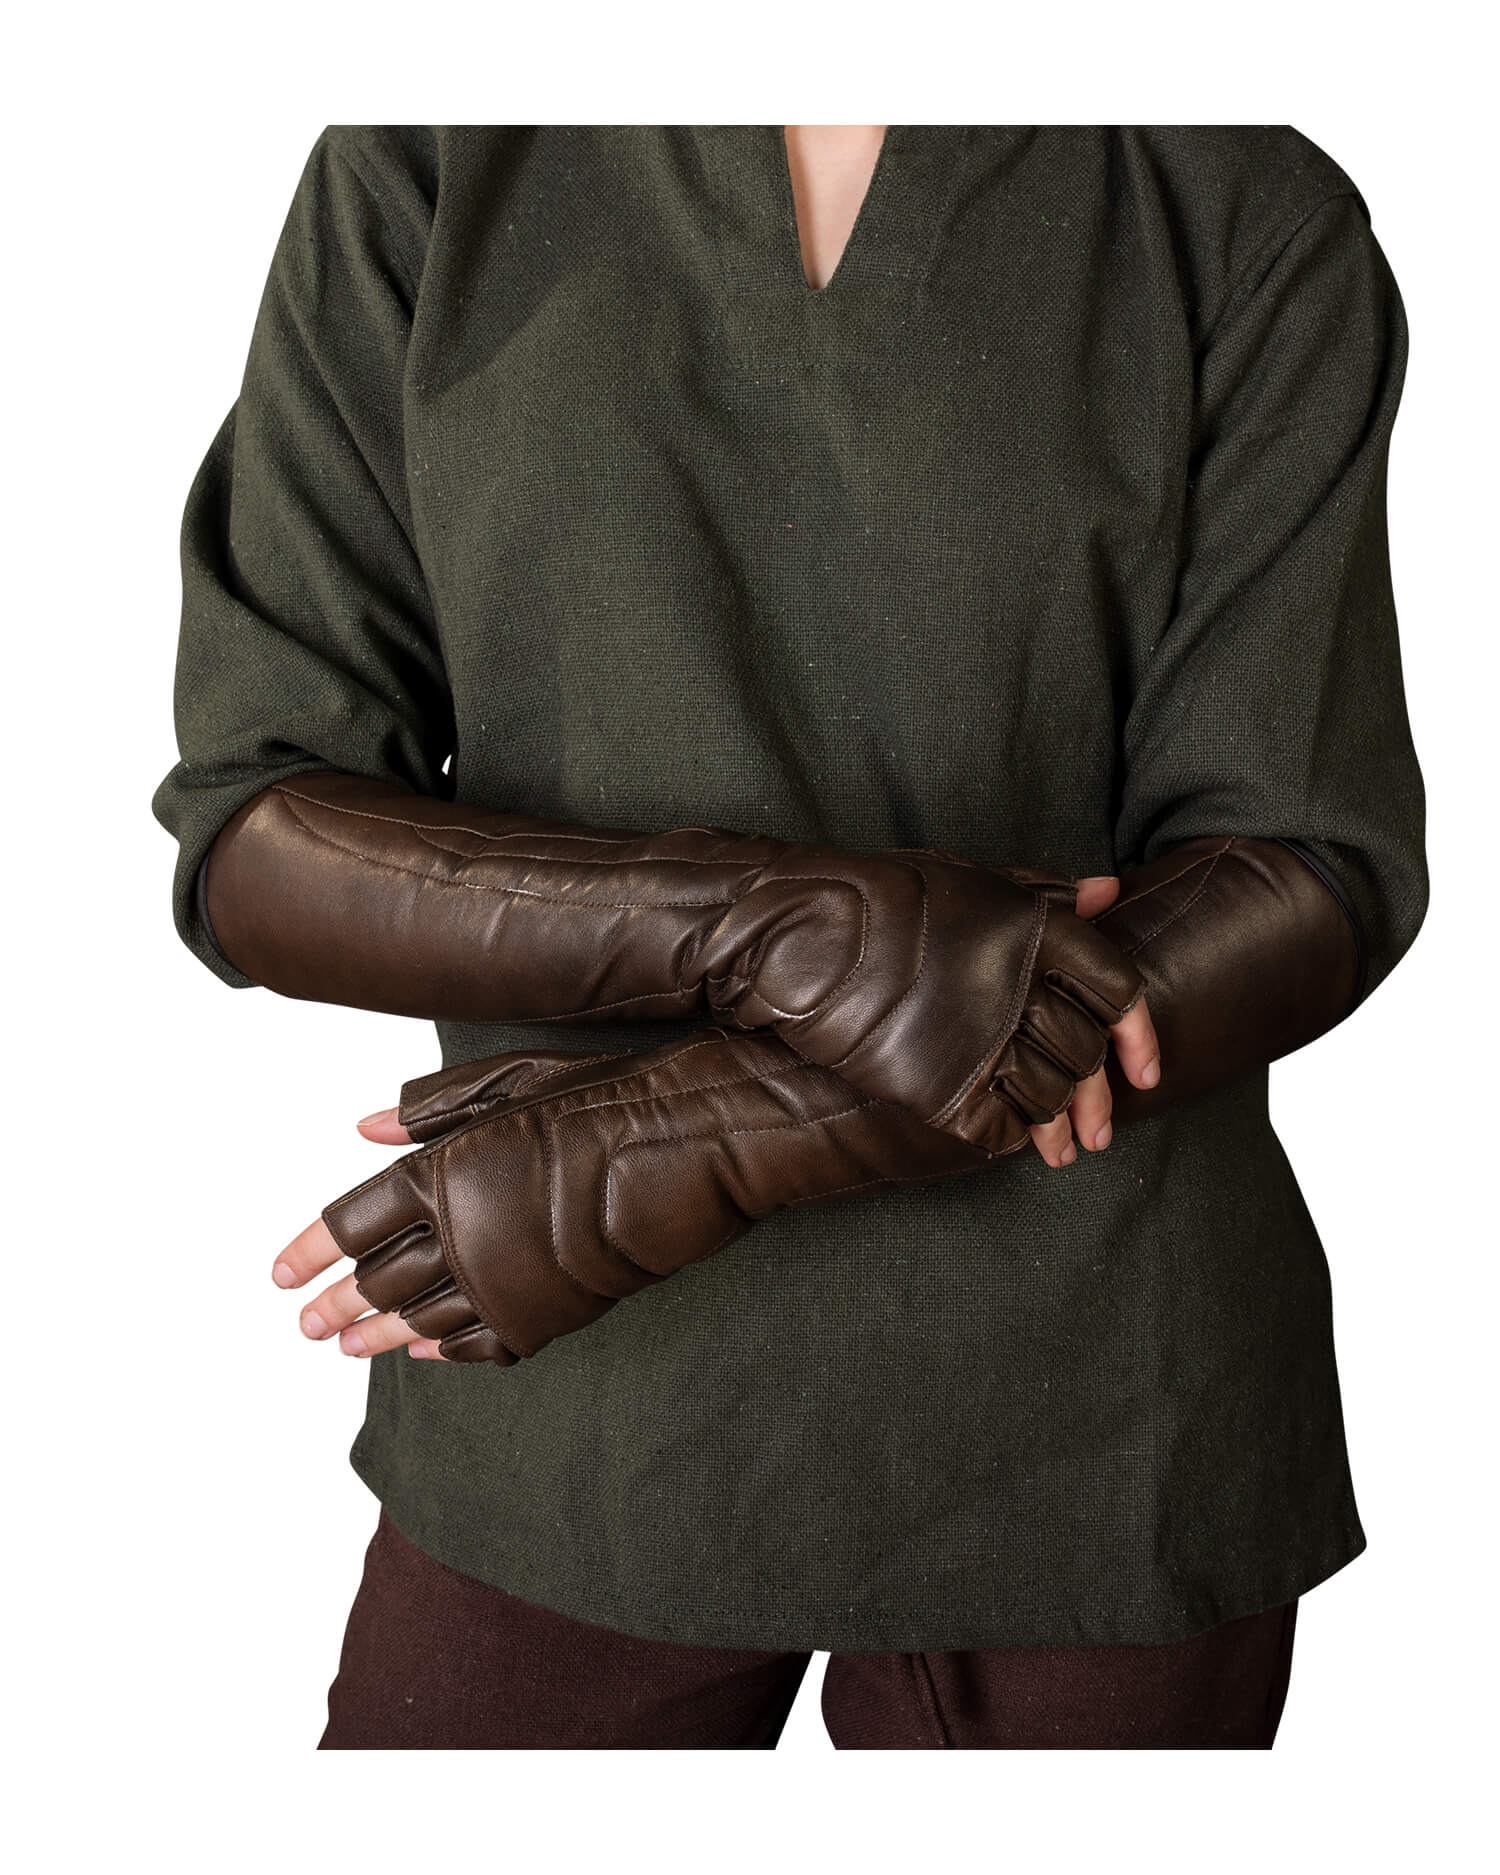 Gillian Handschuhe braun M